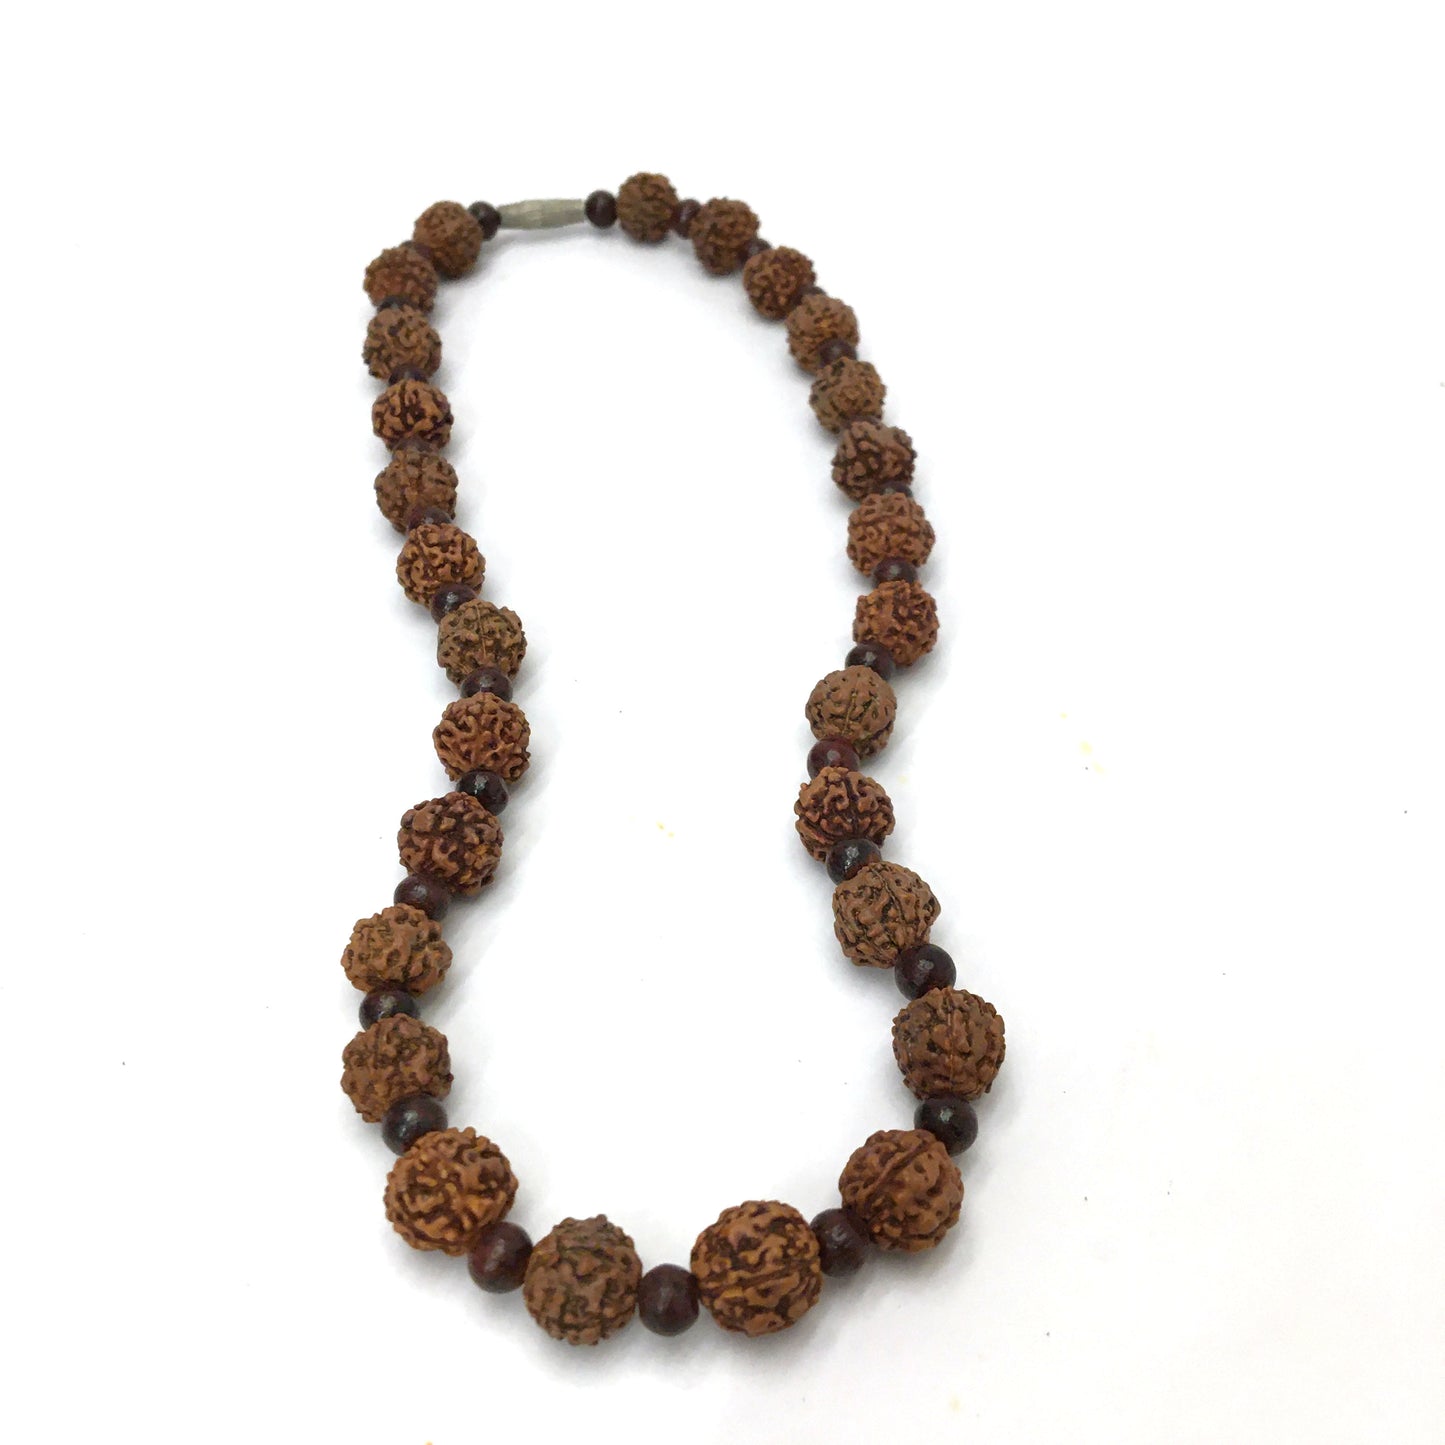 Handcrafted India Rudraksha and Rosewood Bead Decorative Auspicious Necklace